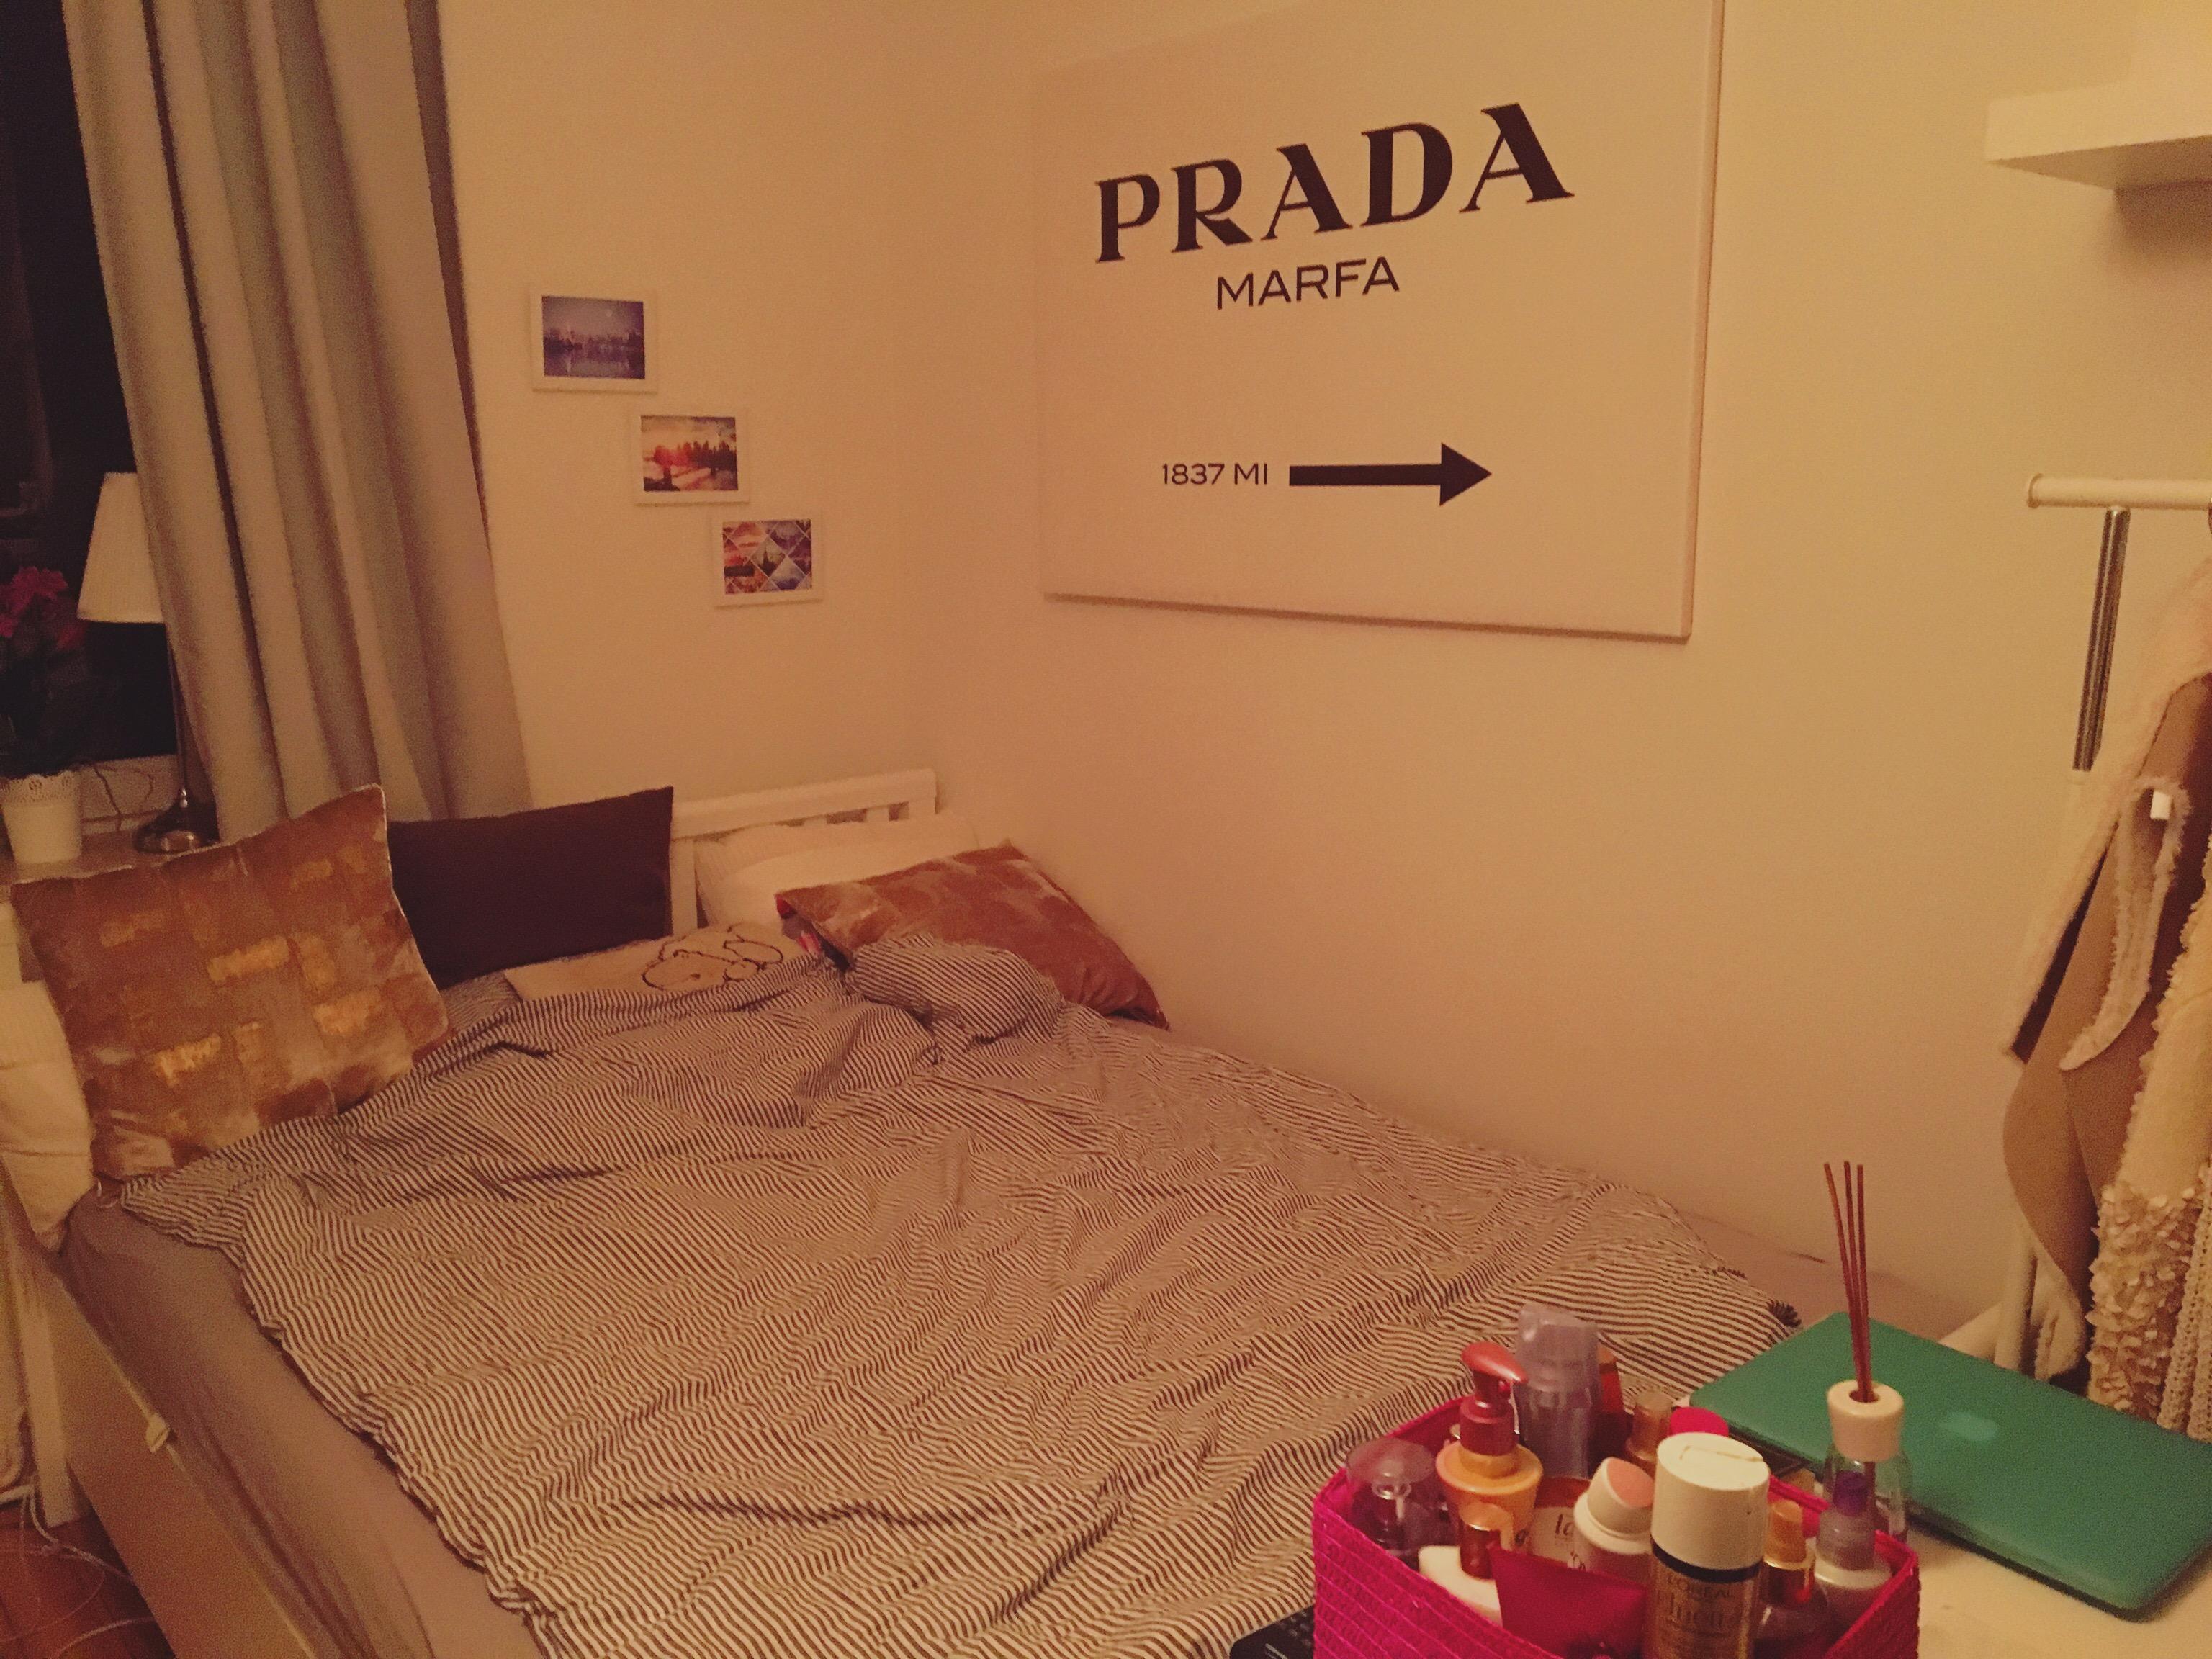 Rückzugsort <3
#home #prada #IKEA